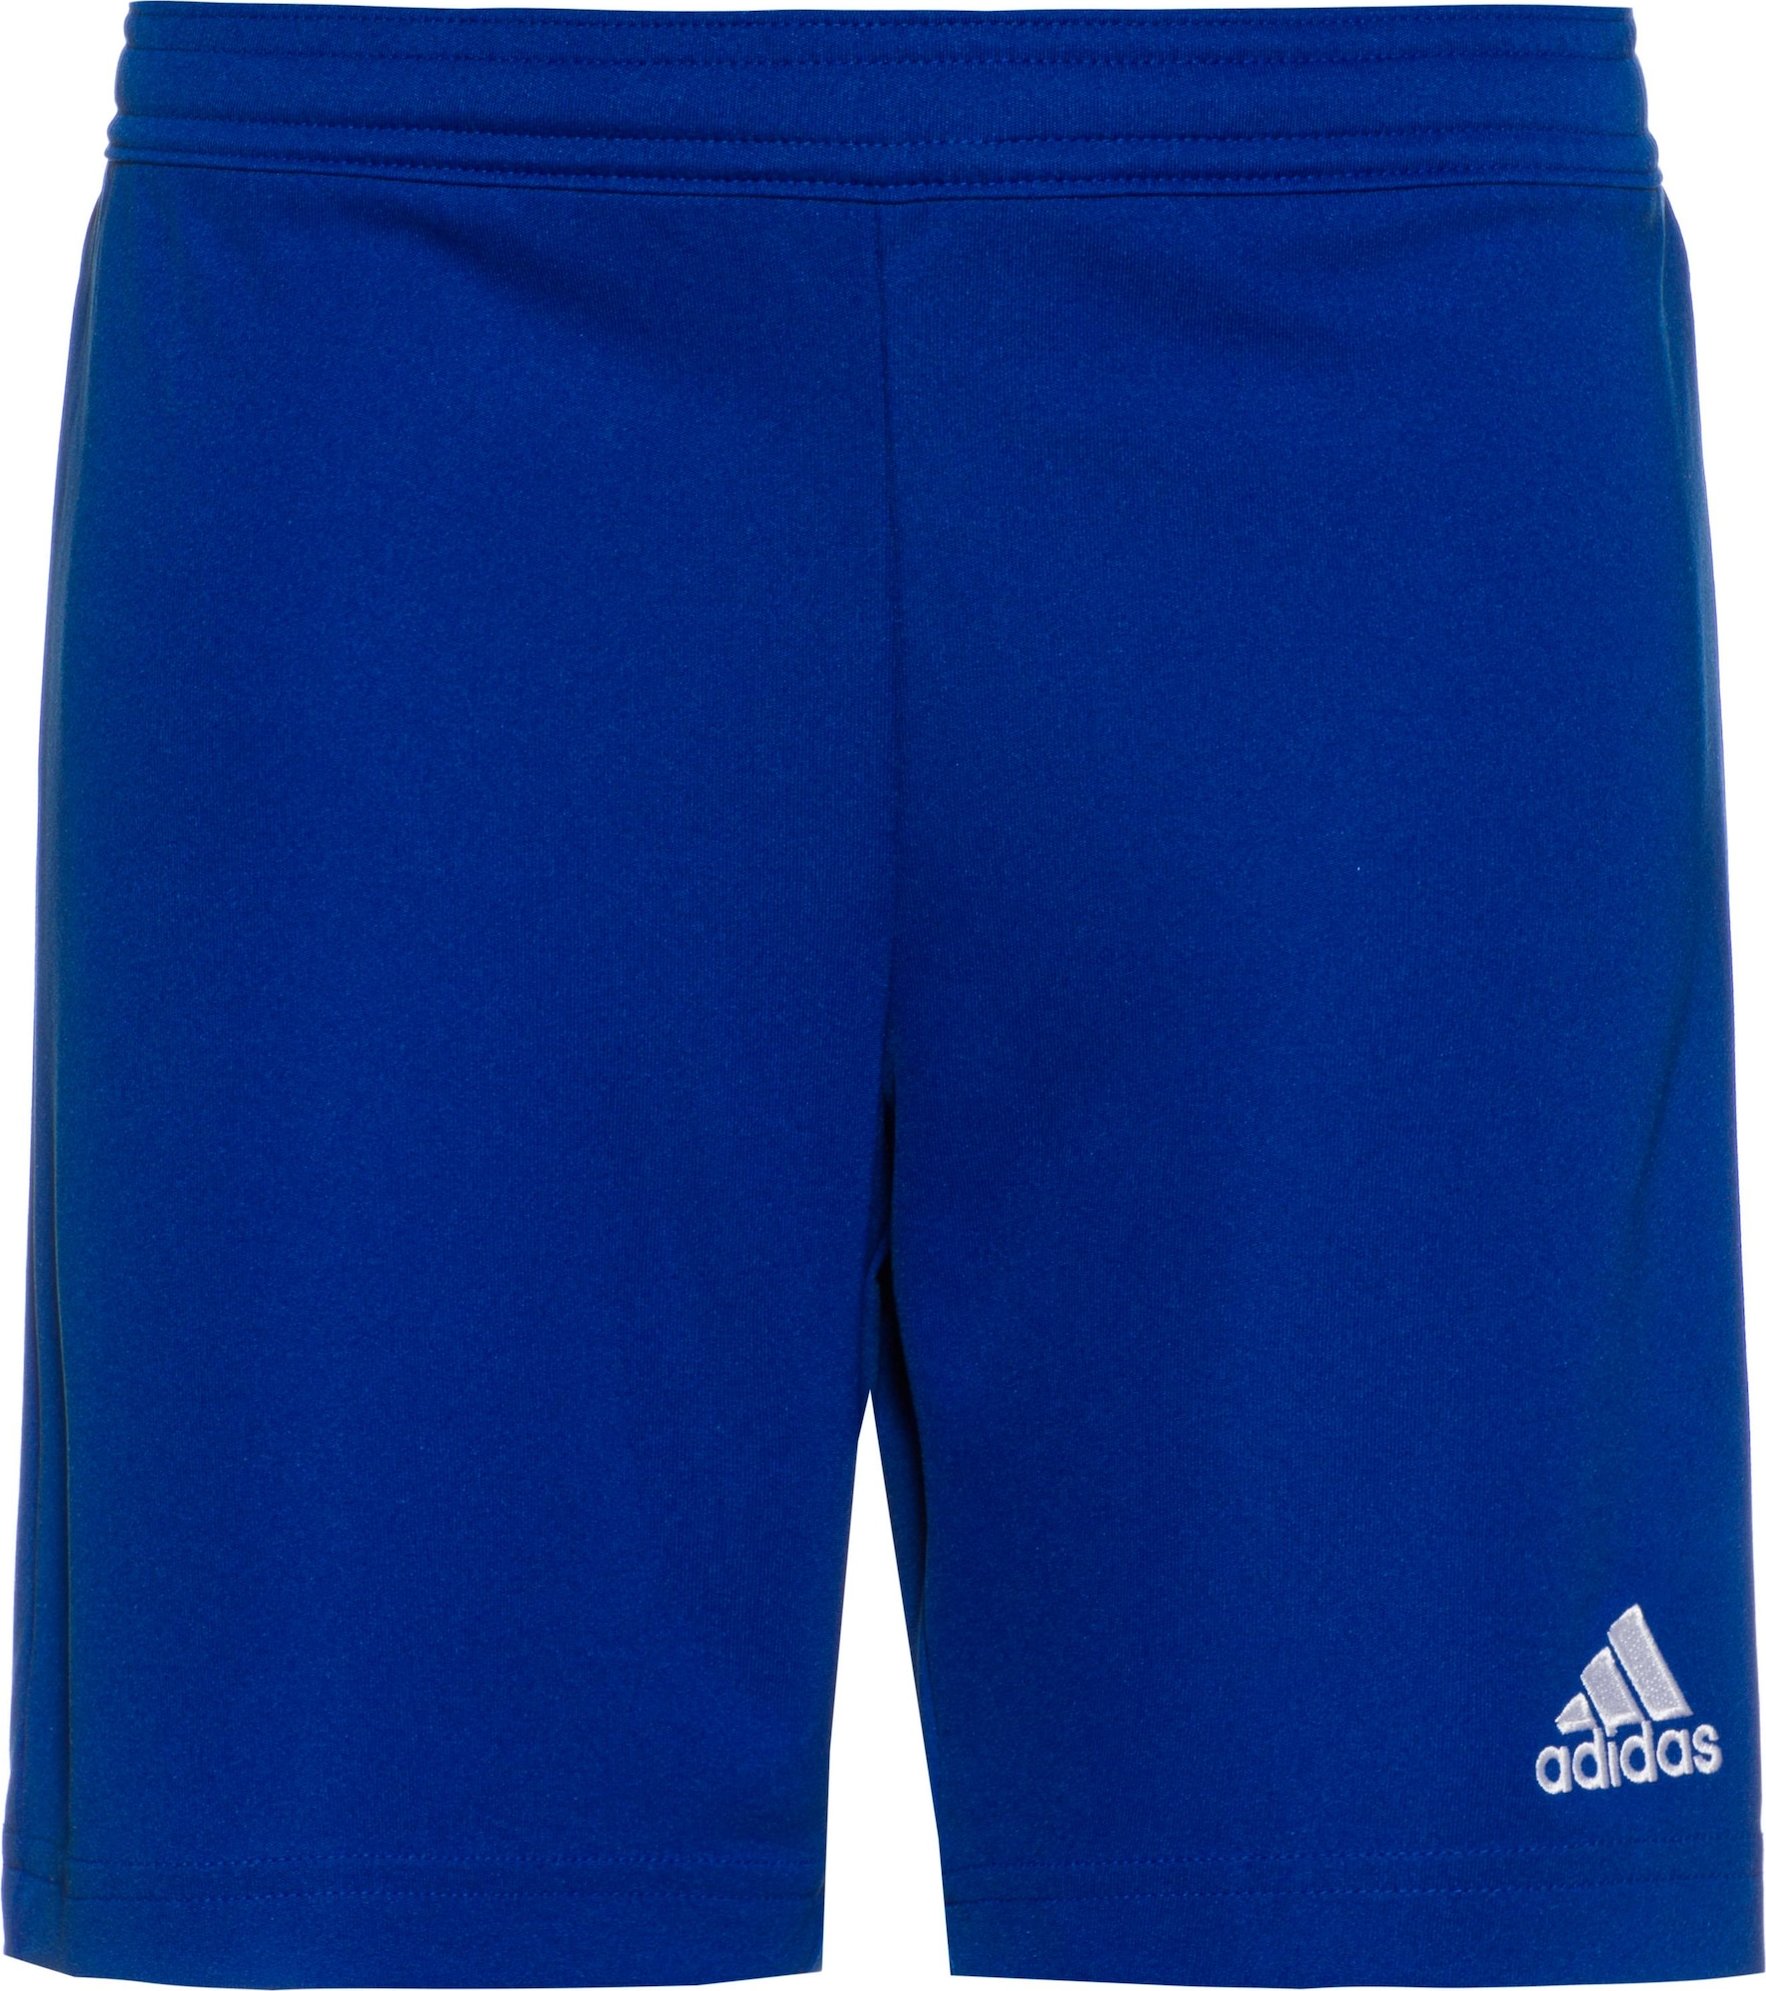 ADIDAS PERFORMANCE Sportovní kalhoty 'Entrada22' tmavě modrá / bílá